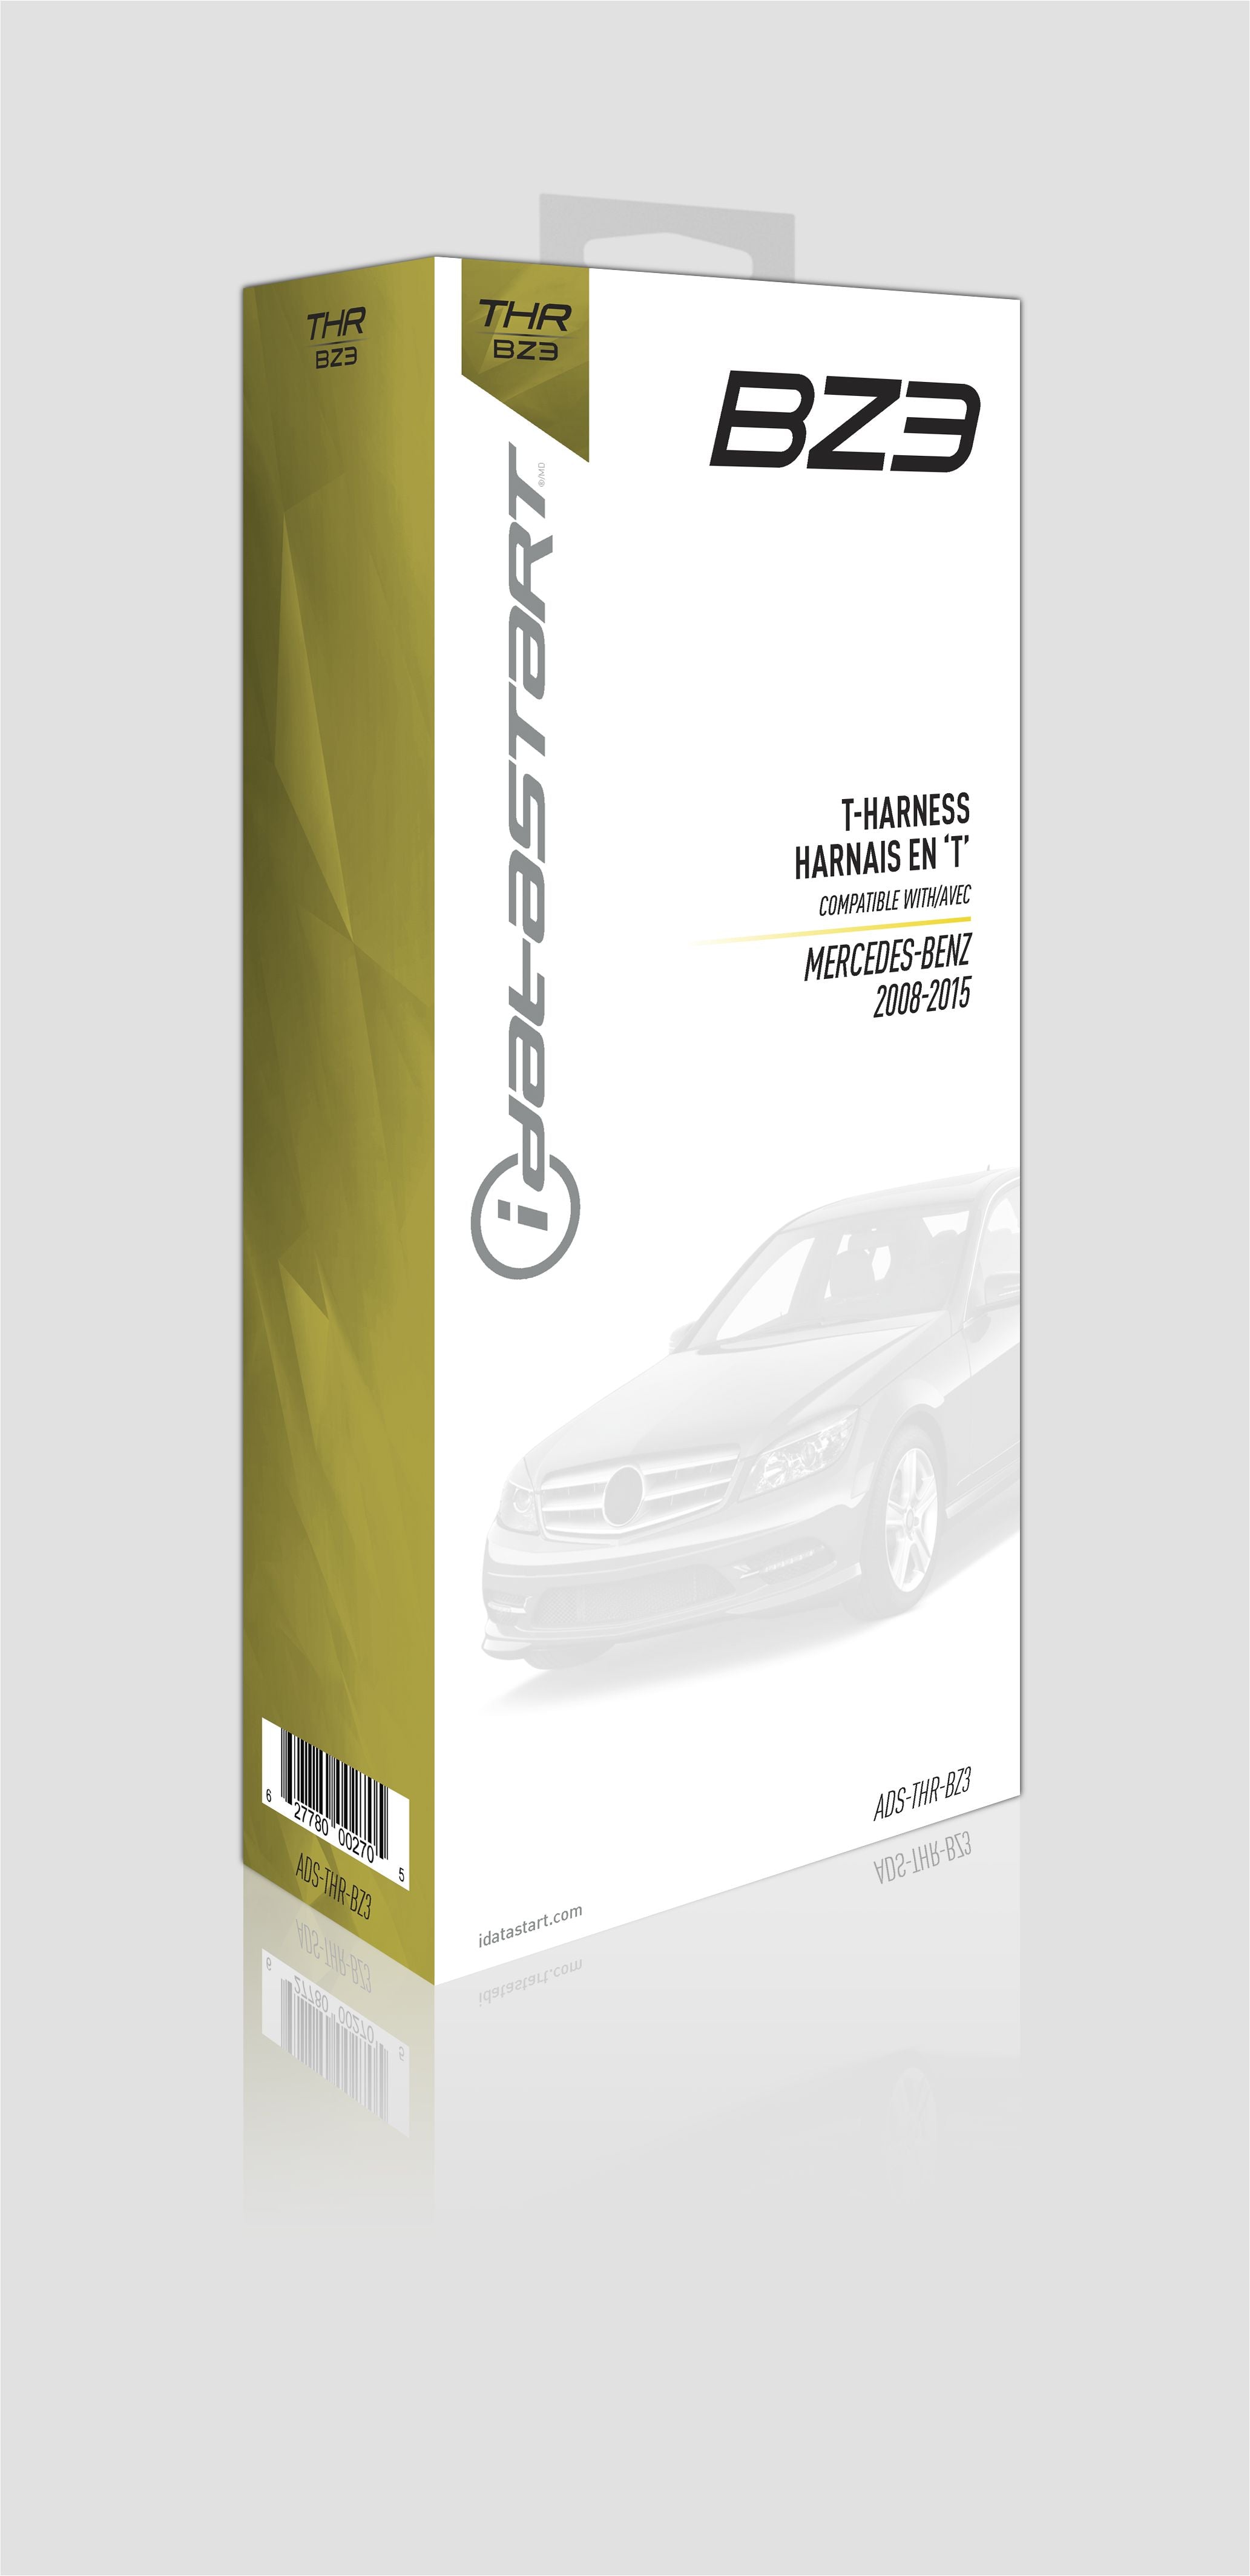 iDatastart ADS-THR-BZ3 - T-Harness for CMBMXA0 includes BZ3 Expansion Module for Select Mercedes-Benz models 08-15